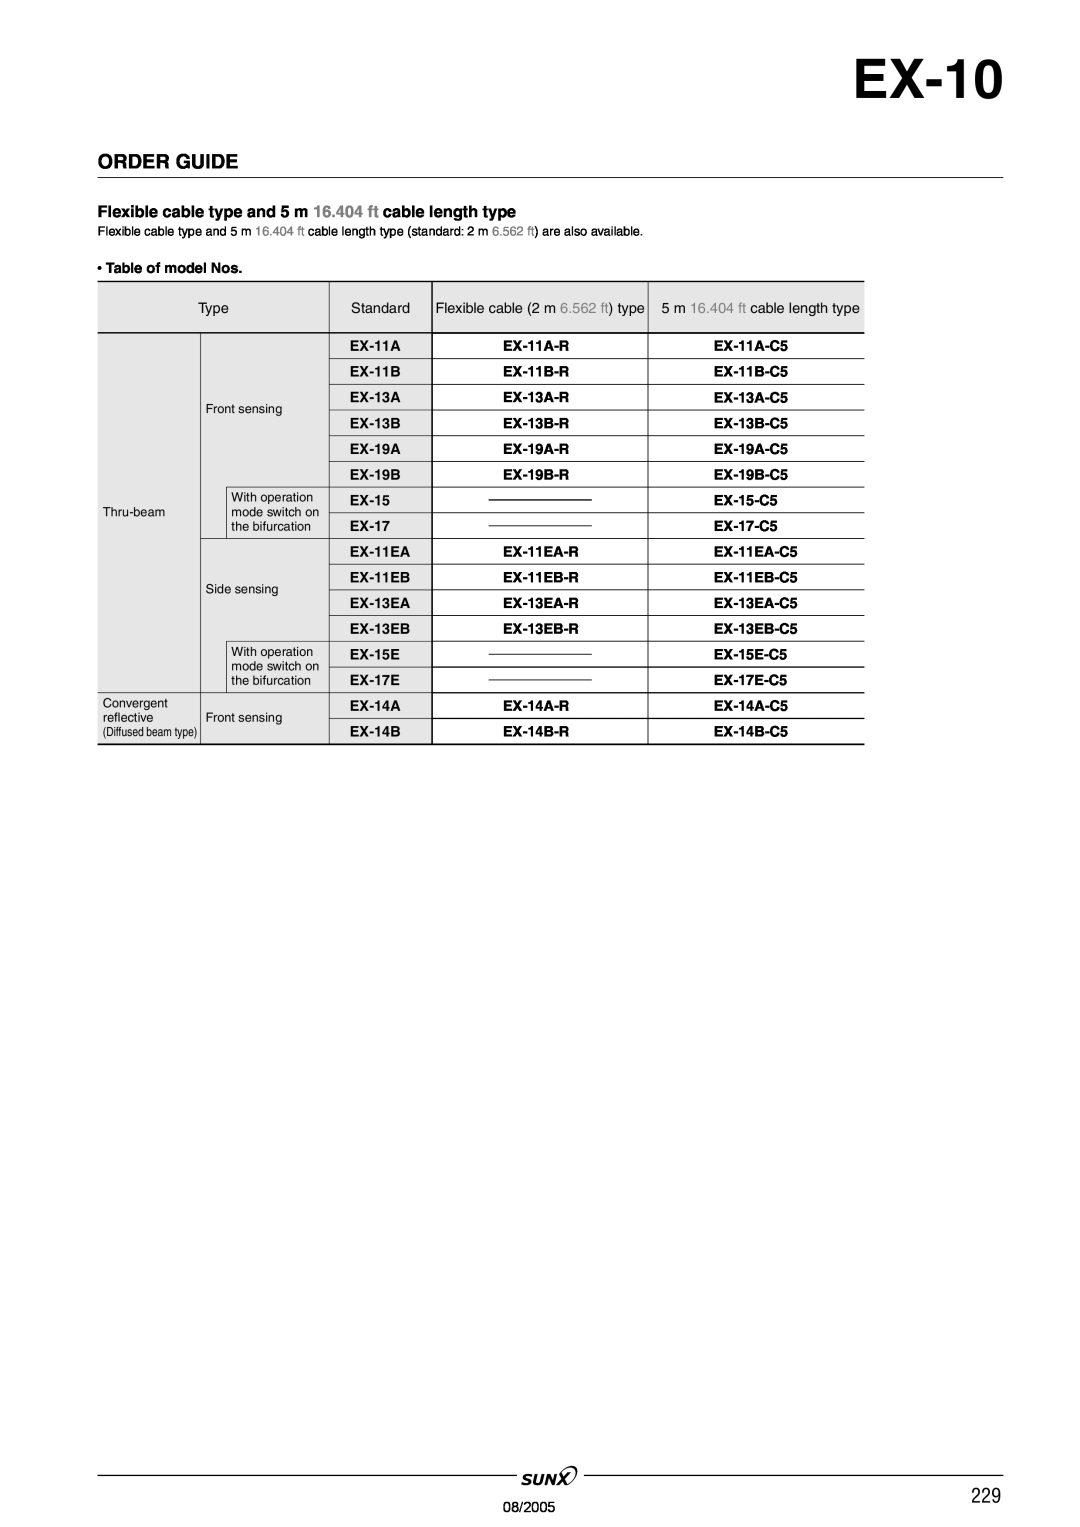 Panasonic EX-10 Series manual Order Guide, Table of model Nos 